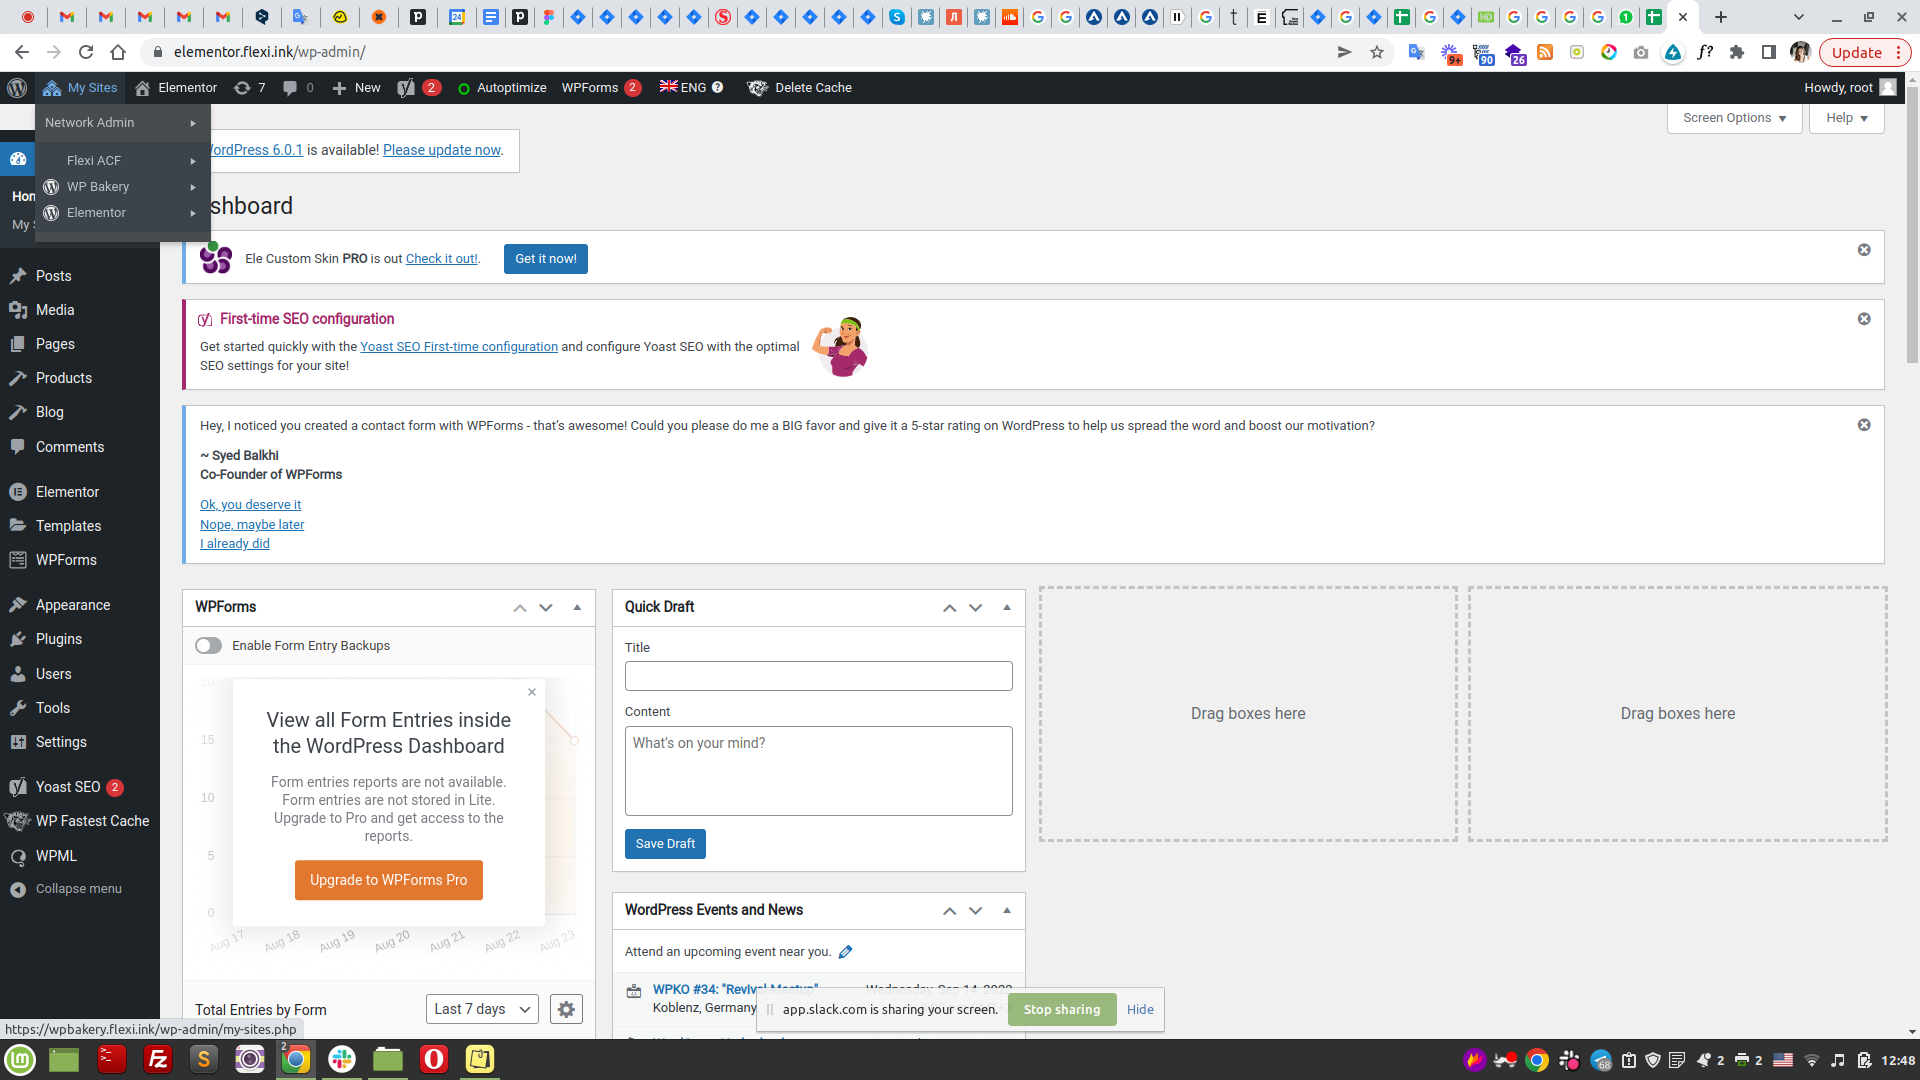 The WordPress Multisite network admin dashboard